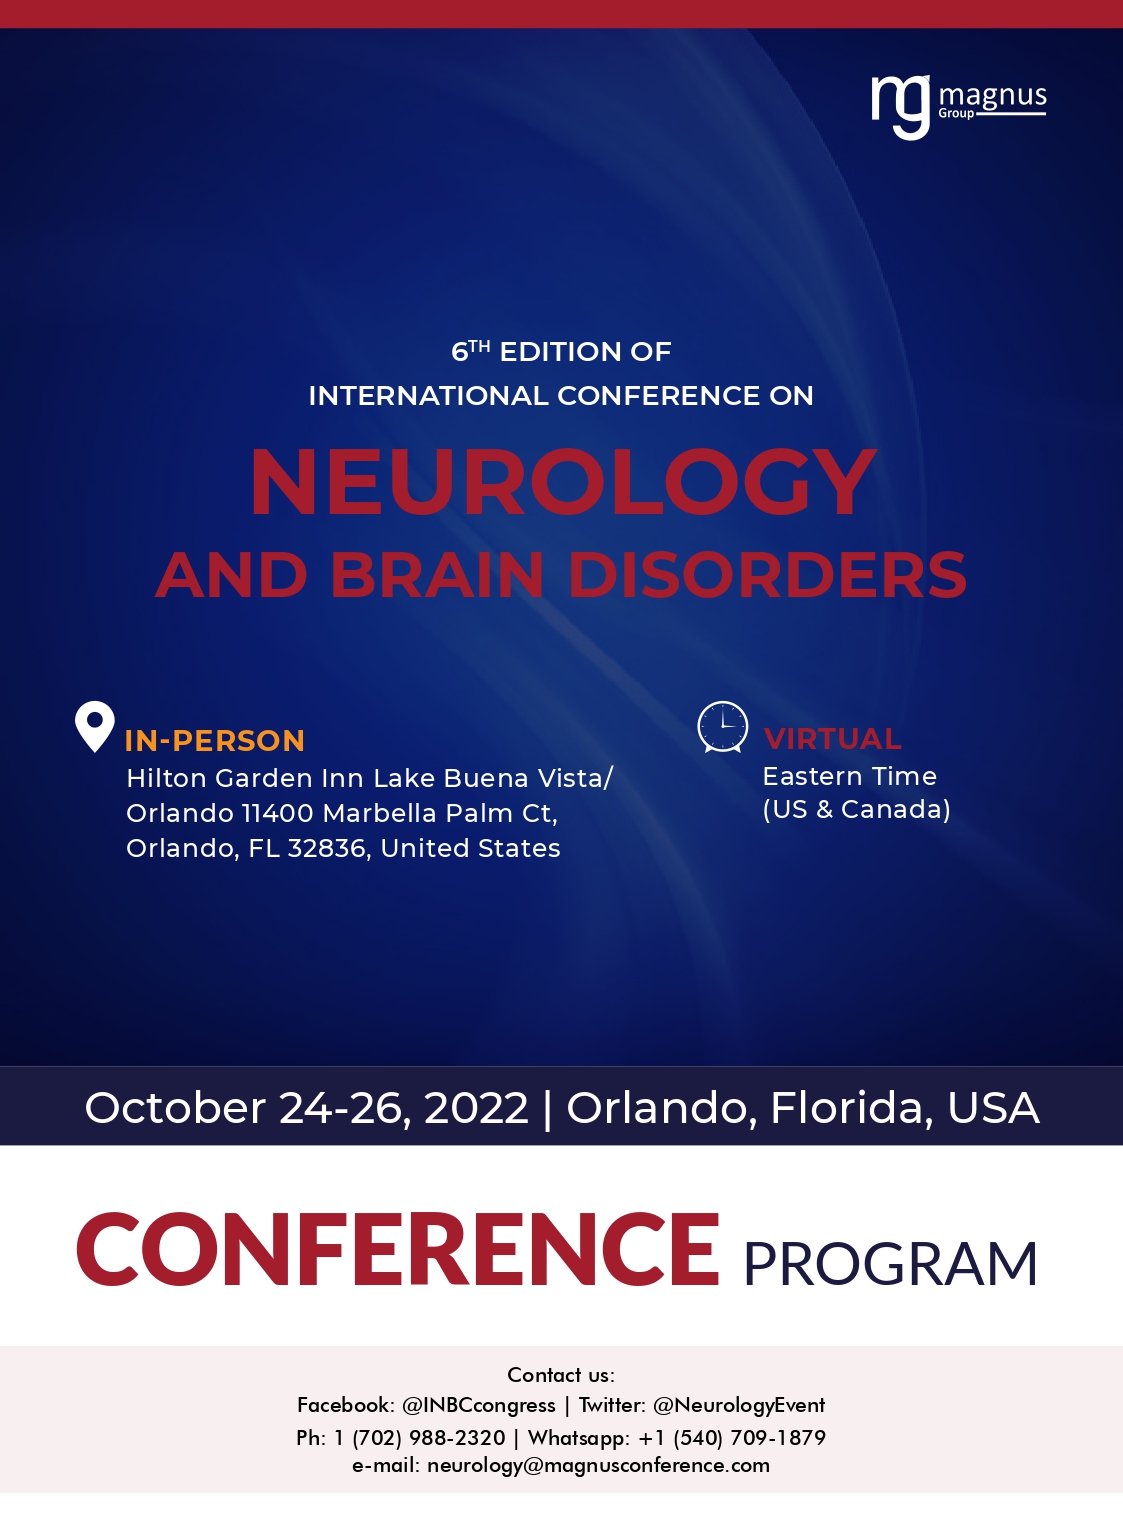 6th Edition of International Conference on Neurology and Brain Disorders | Orlando, Florida, USA Program